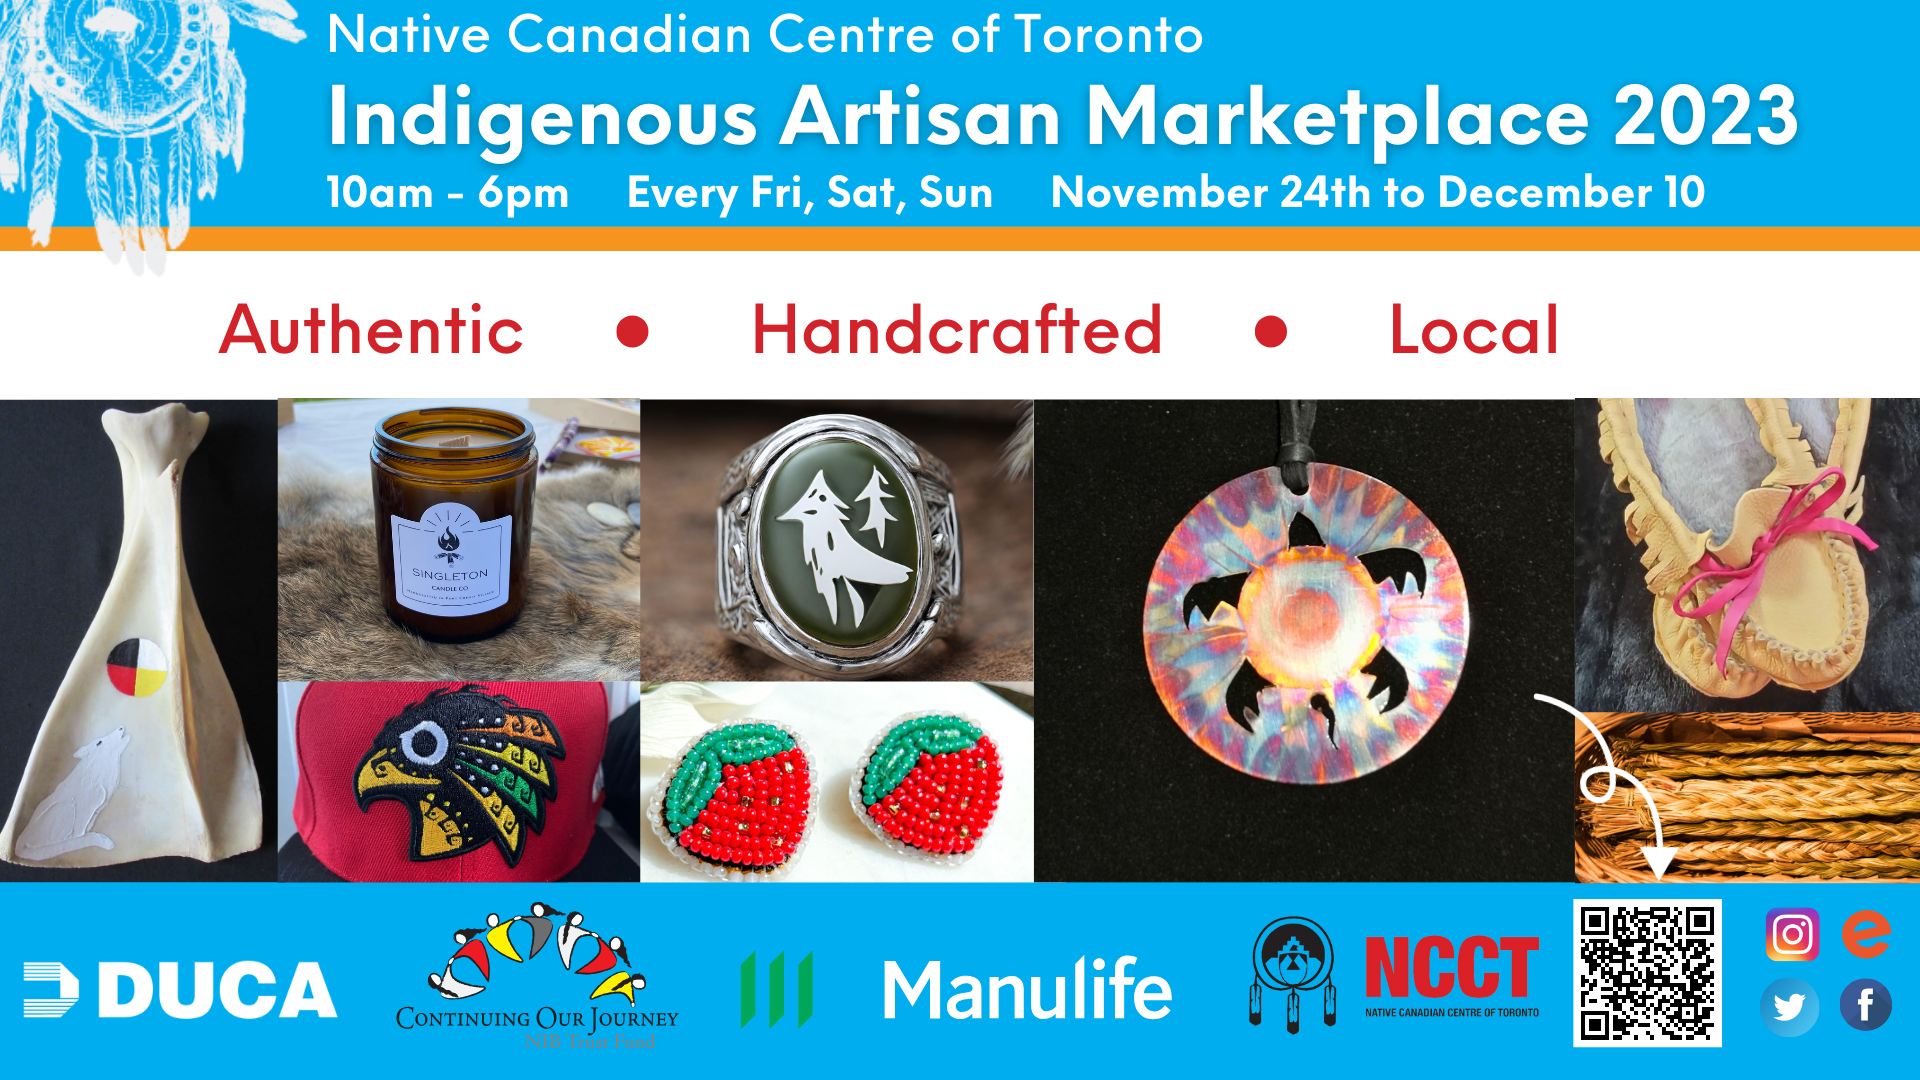 The Indigenous Artisan Marketplace